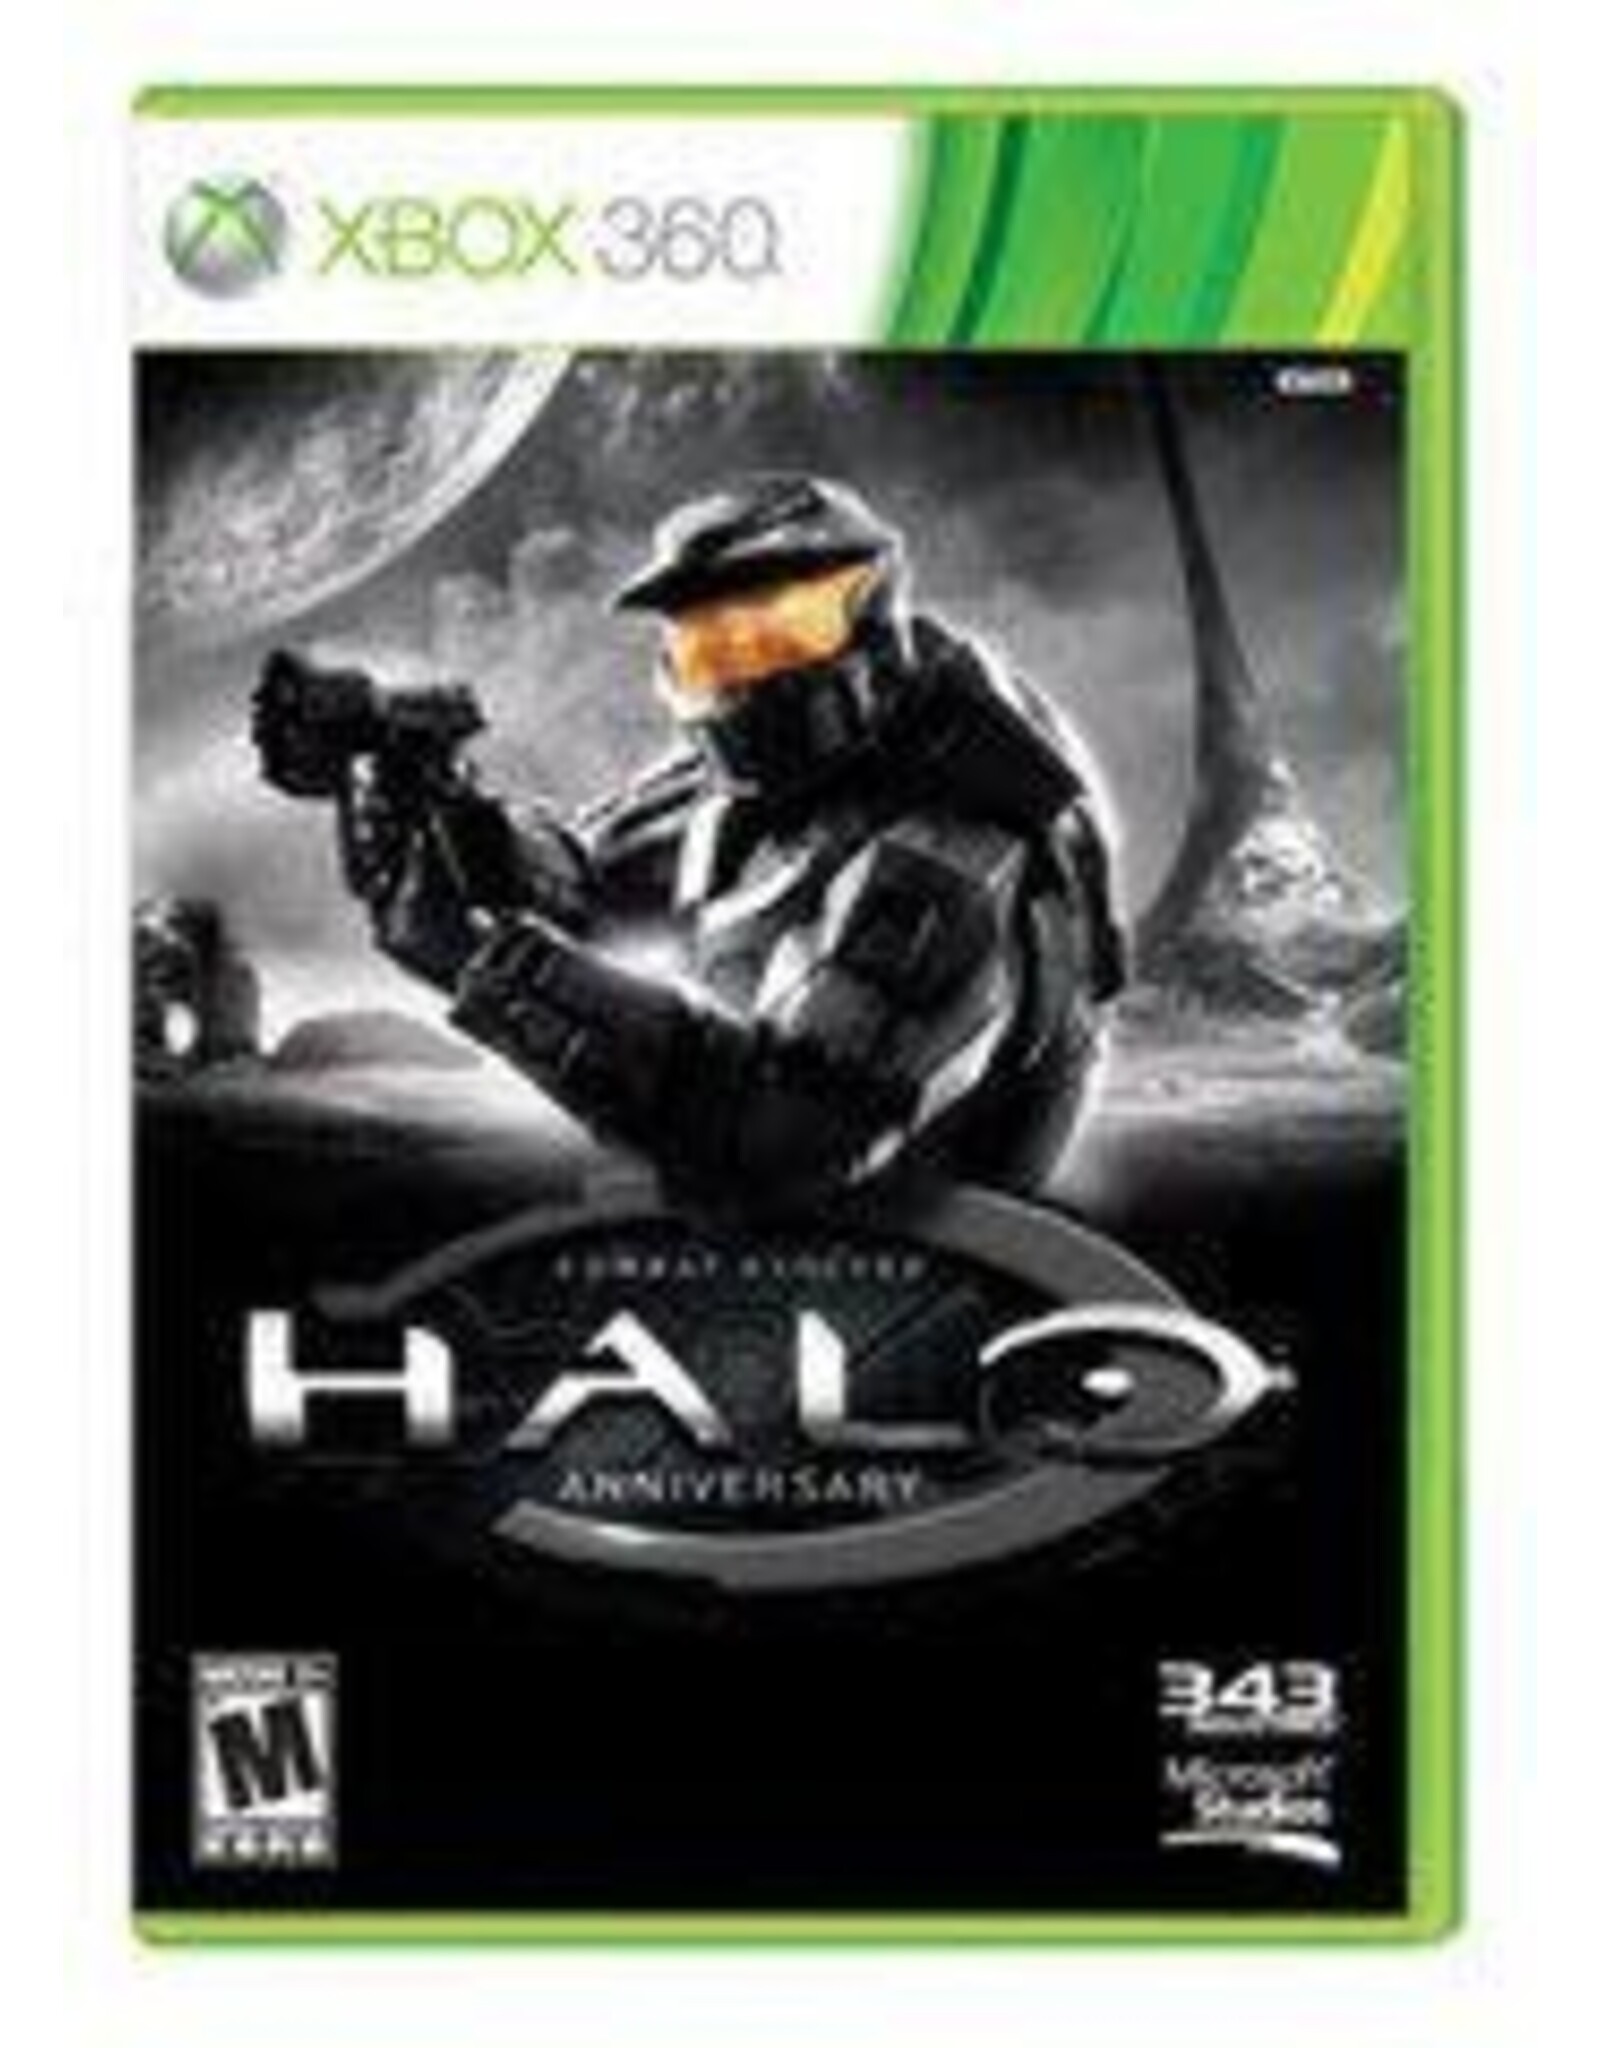 Xbox 360 Halo: Combat Evolved Anniversary (Brand New)